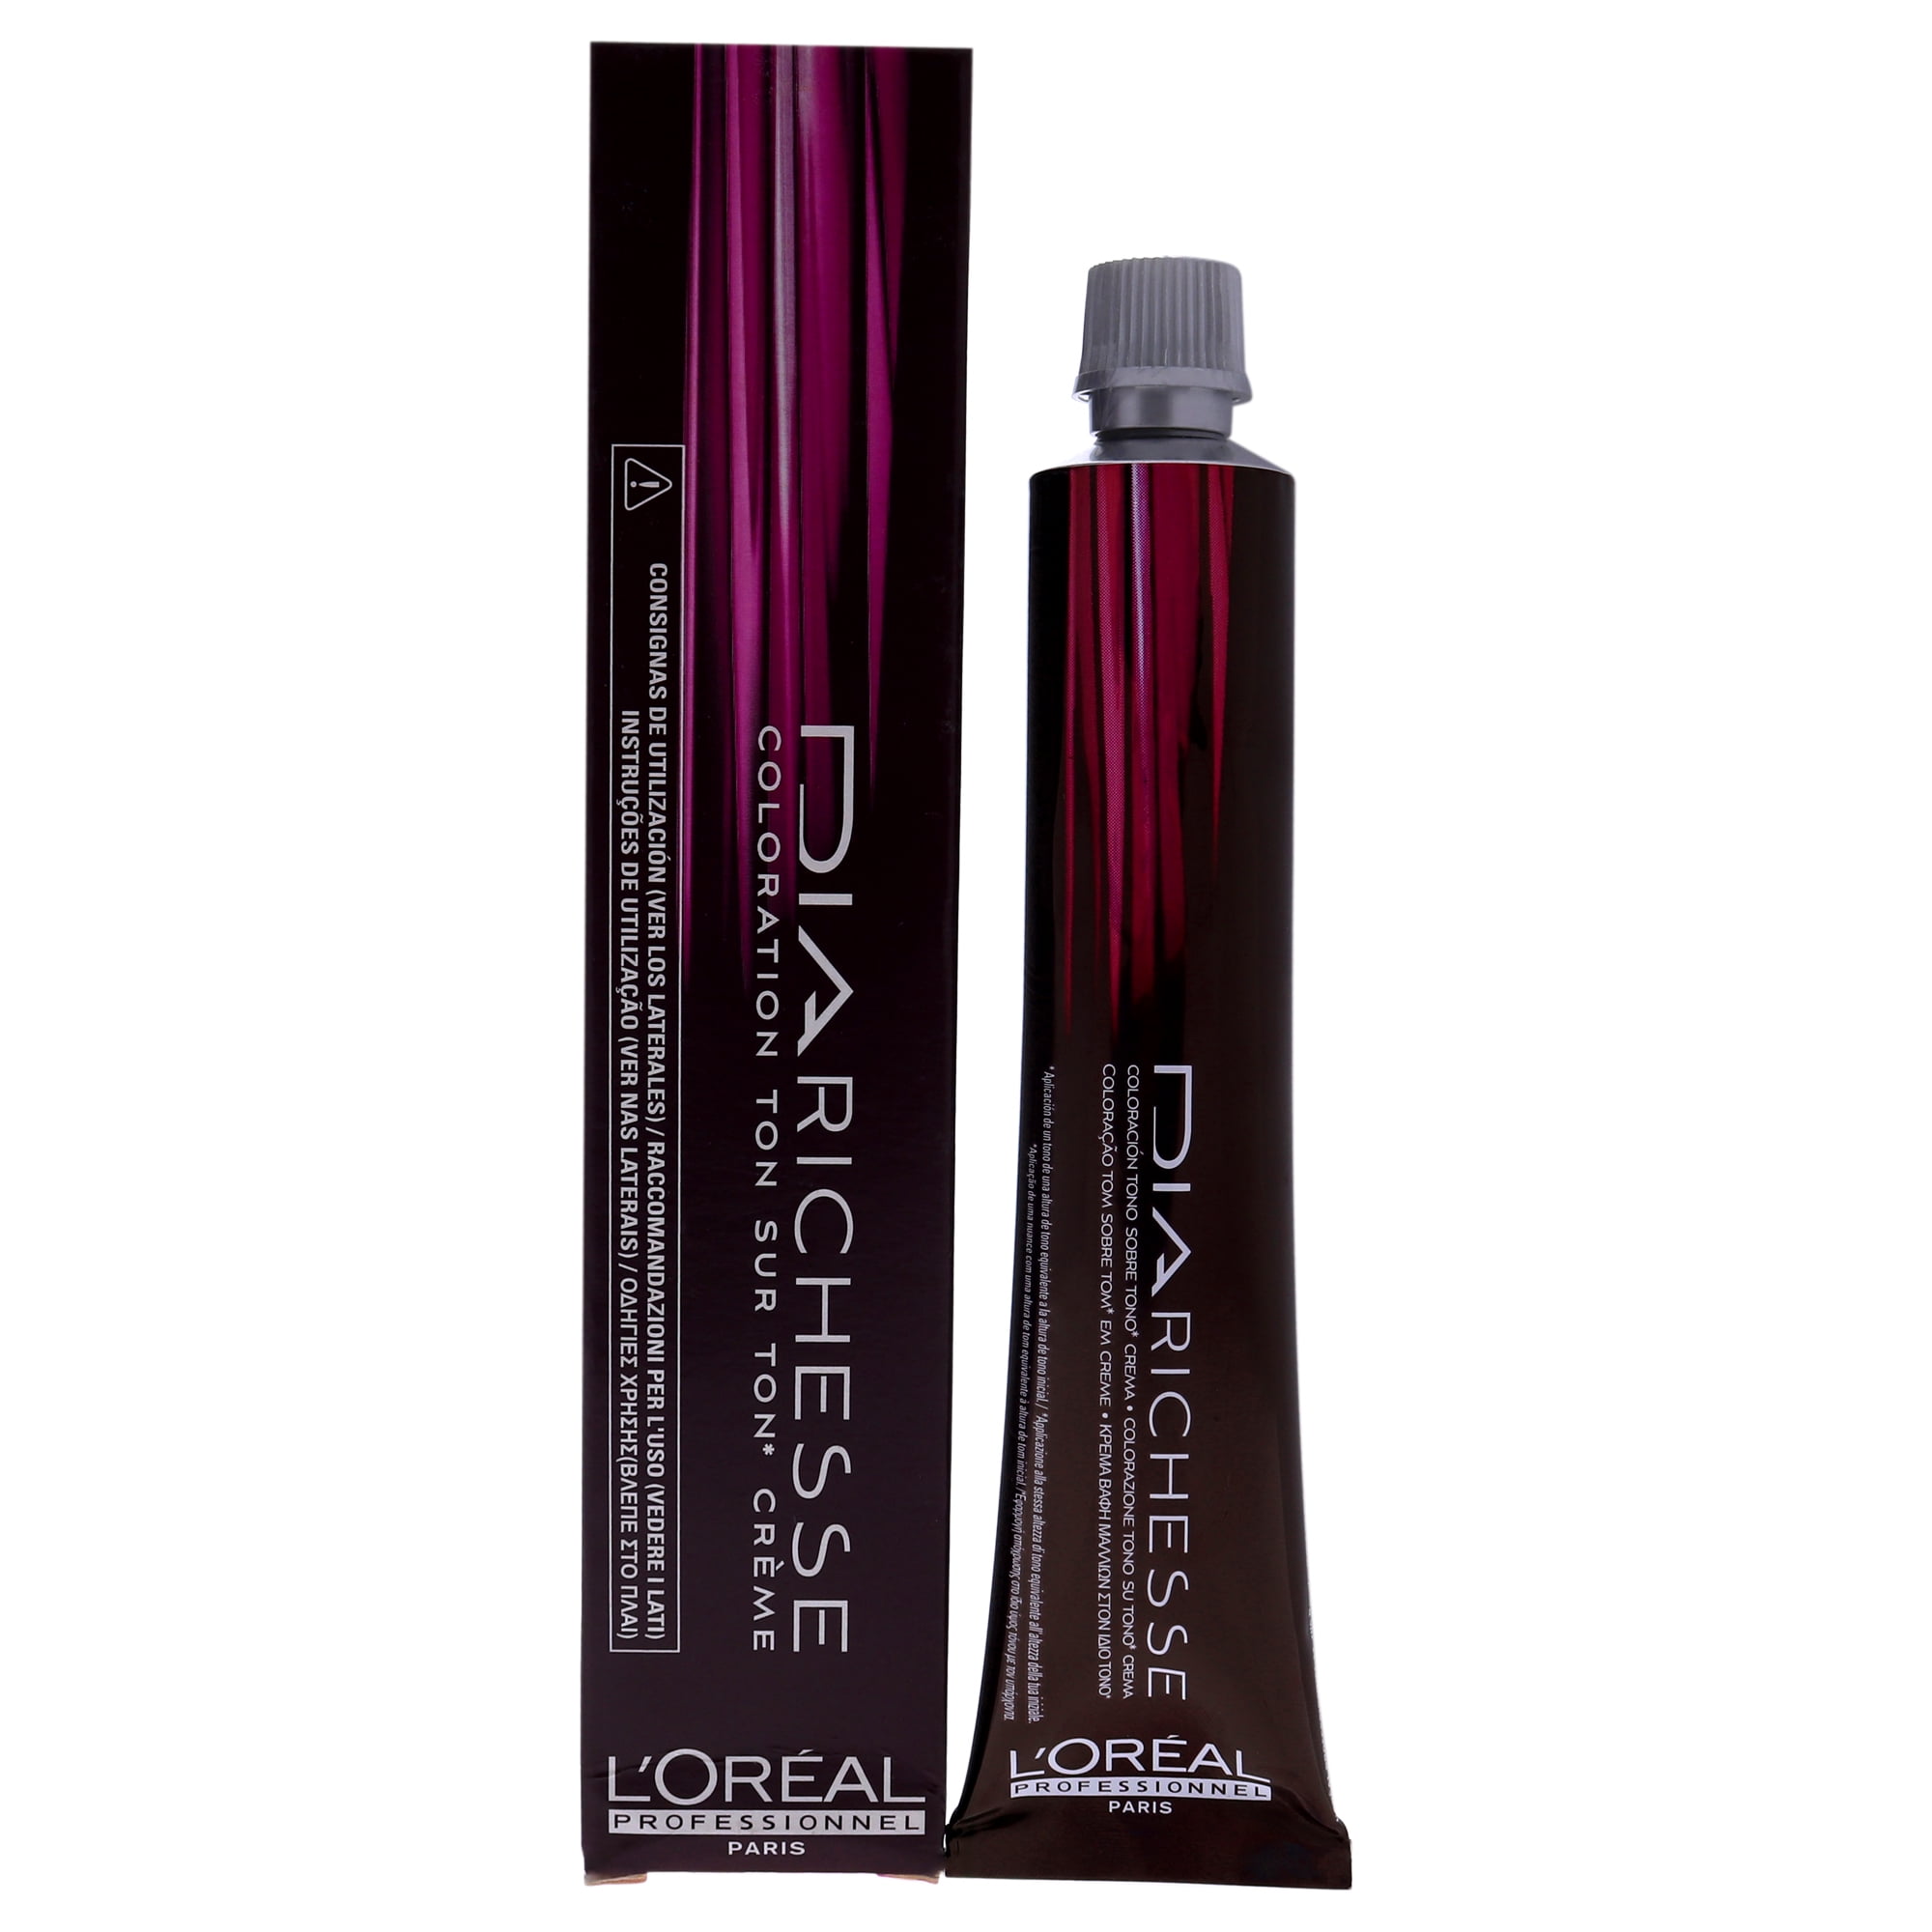 LOreal Professional Dia Richesse - 3 Dark Brown - 1.7 oz Hair Color 